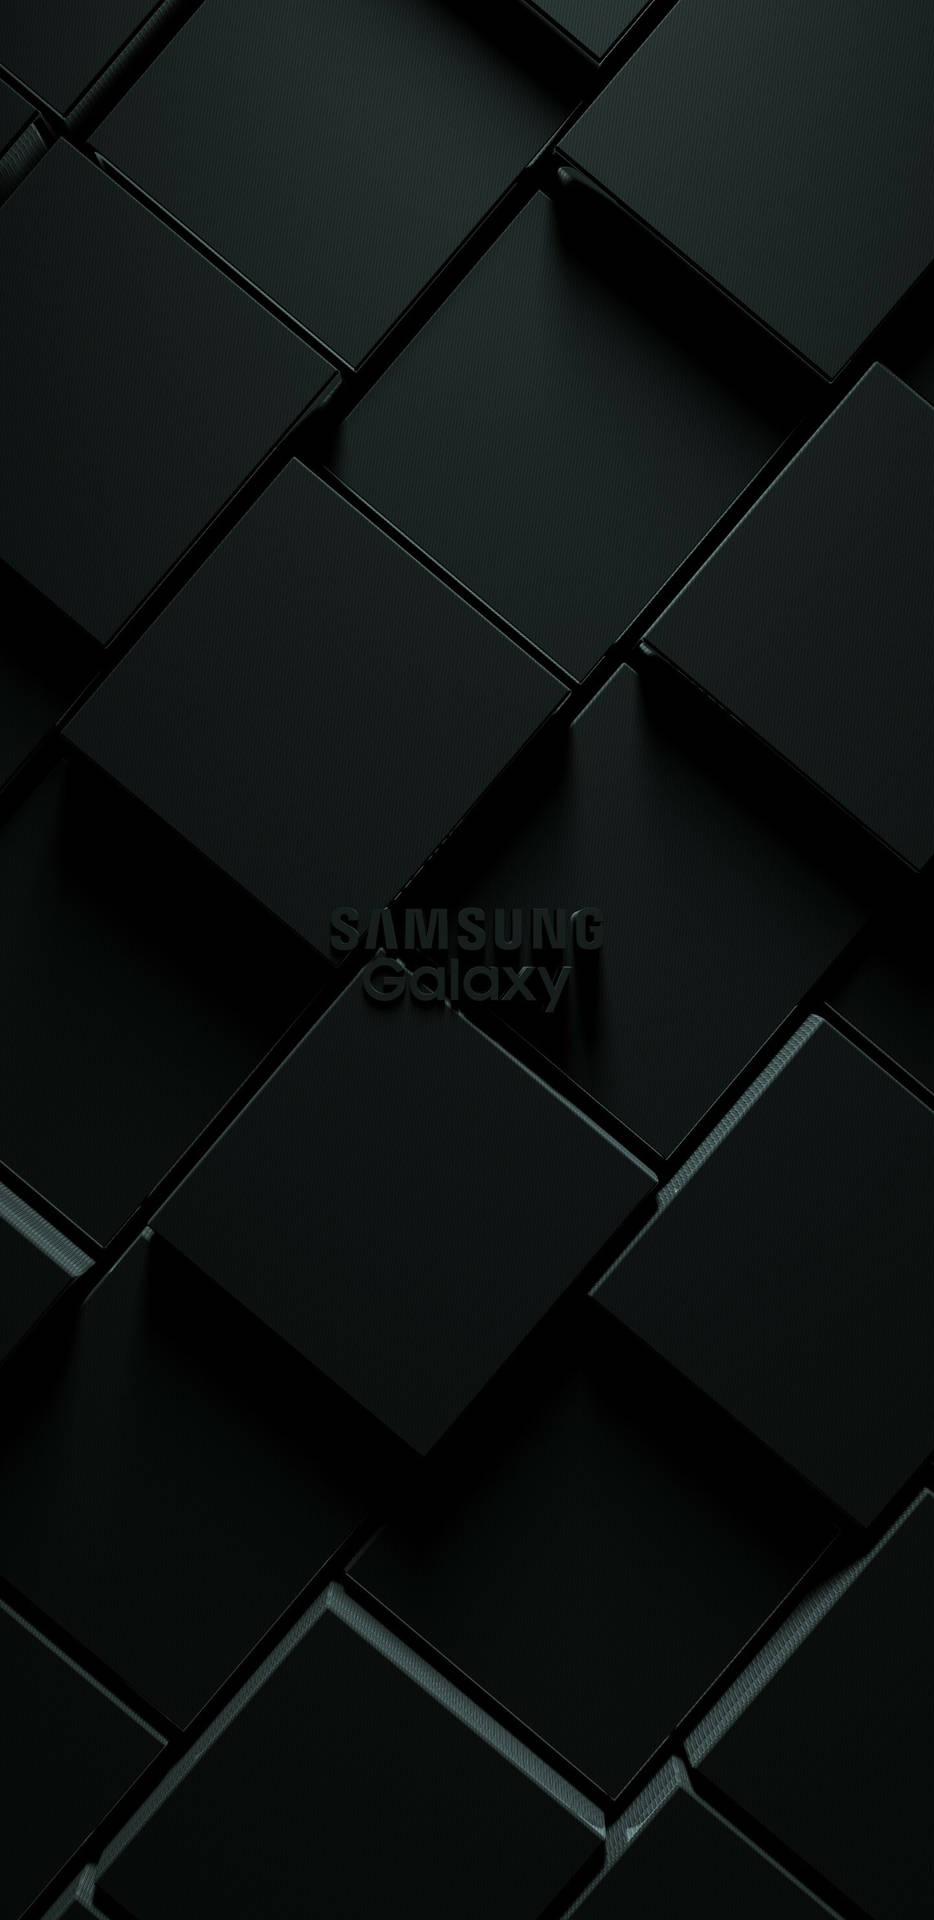 Samsung Galaxy 3d Mørke Æstetiske Terninger Wallpaper